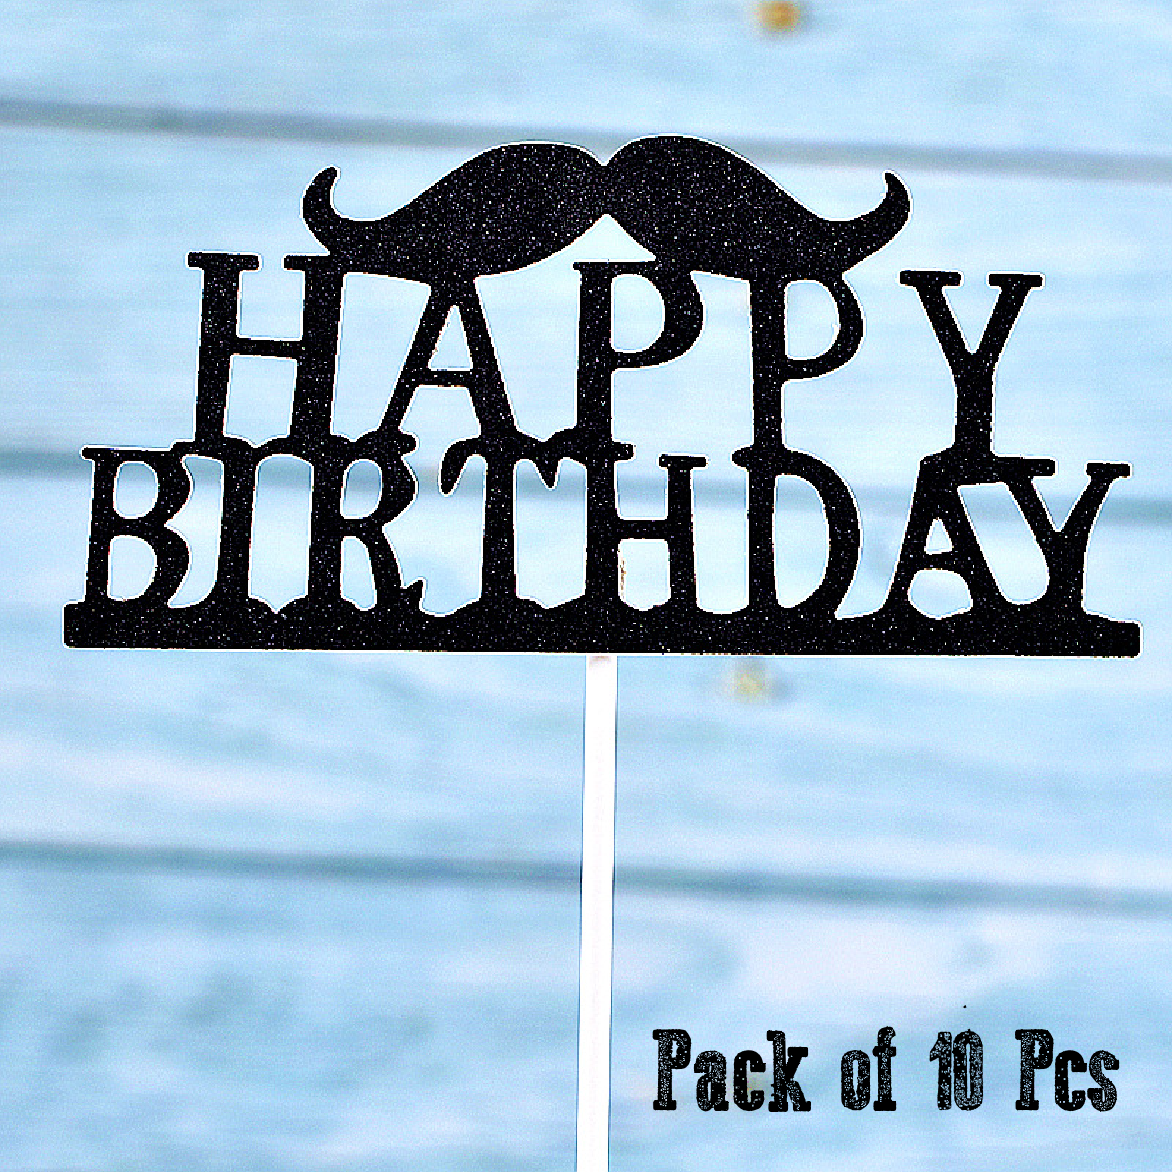 Cake Topper - 'Happy Birthday' moustache mustache 10pack - Rampant Coffee Company